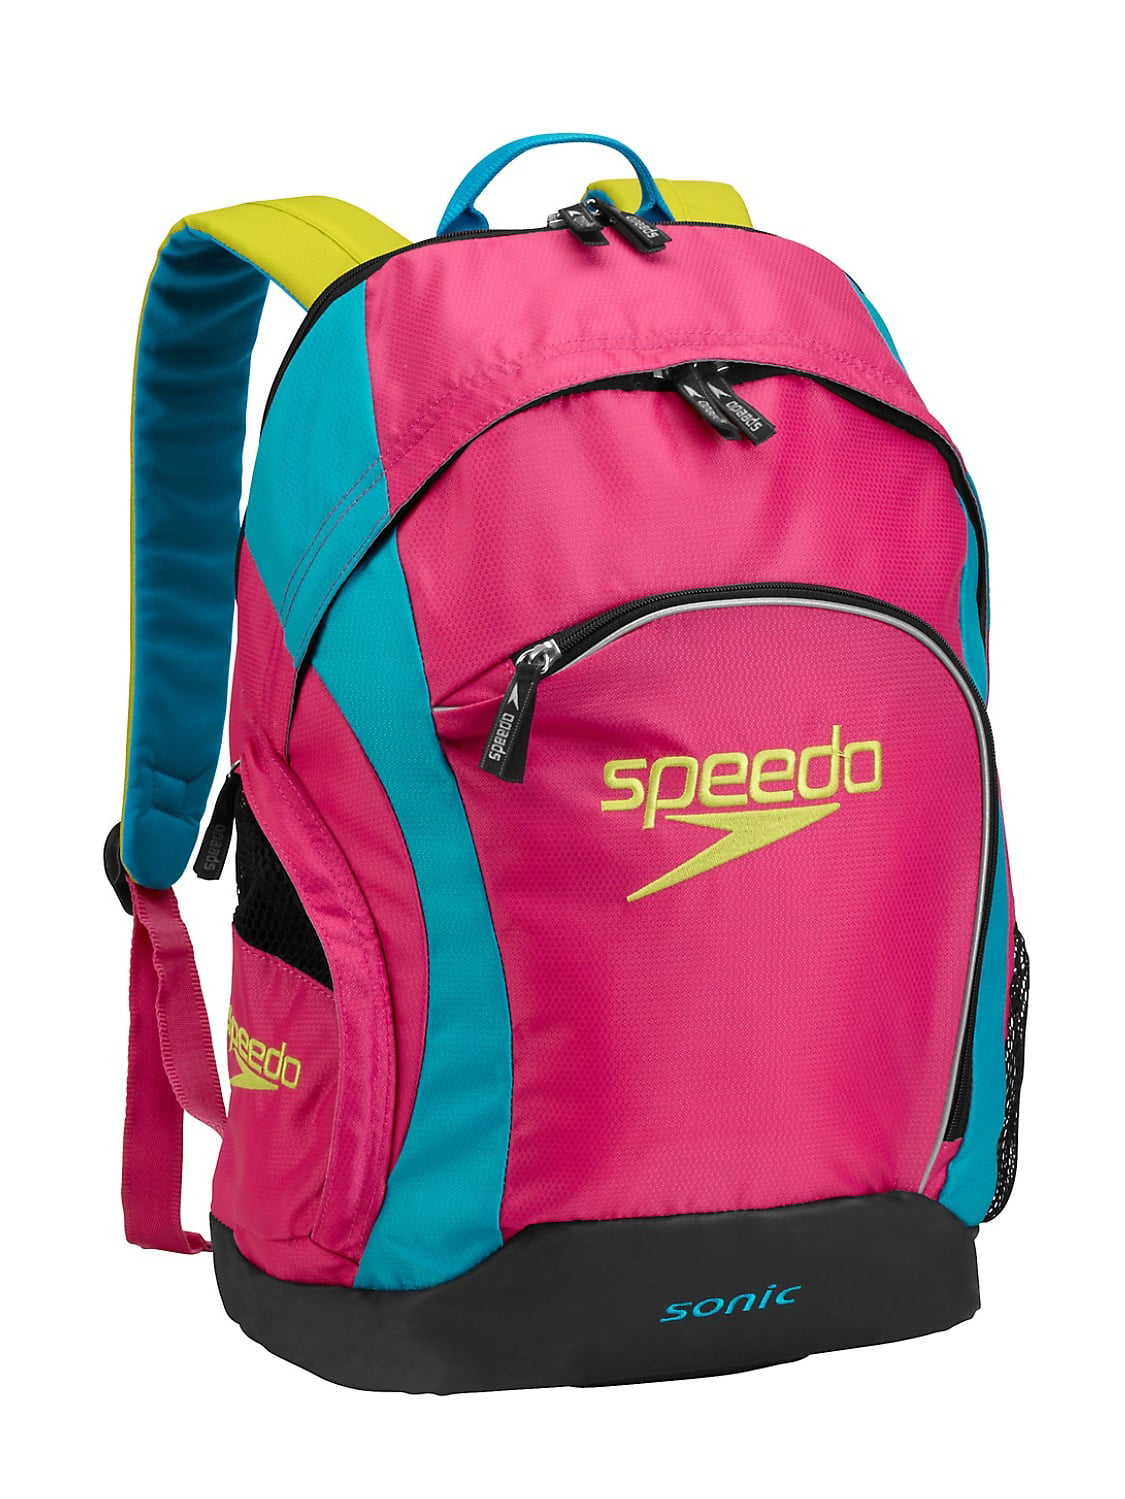 Speedo Super Sonic Backpack 